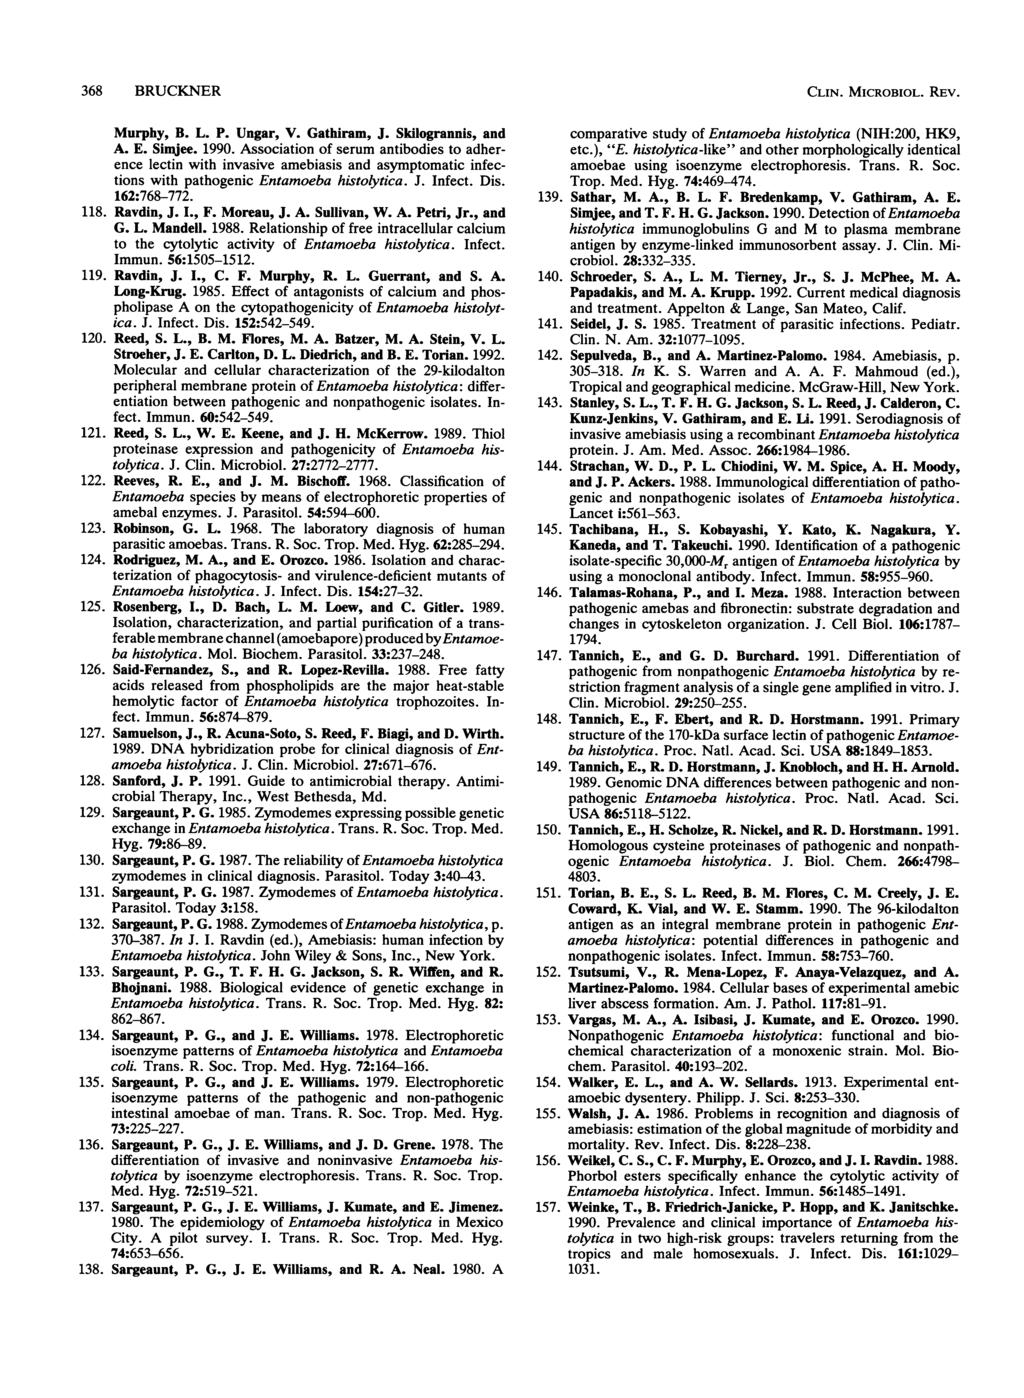 368 BRUCKNER Murphy, B. L. P. Ungar, V. Gathiram, J. Skilogrannis, and A. E. Simjee. 1990.